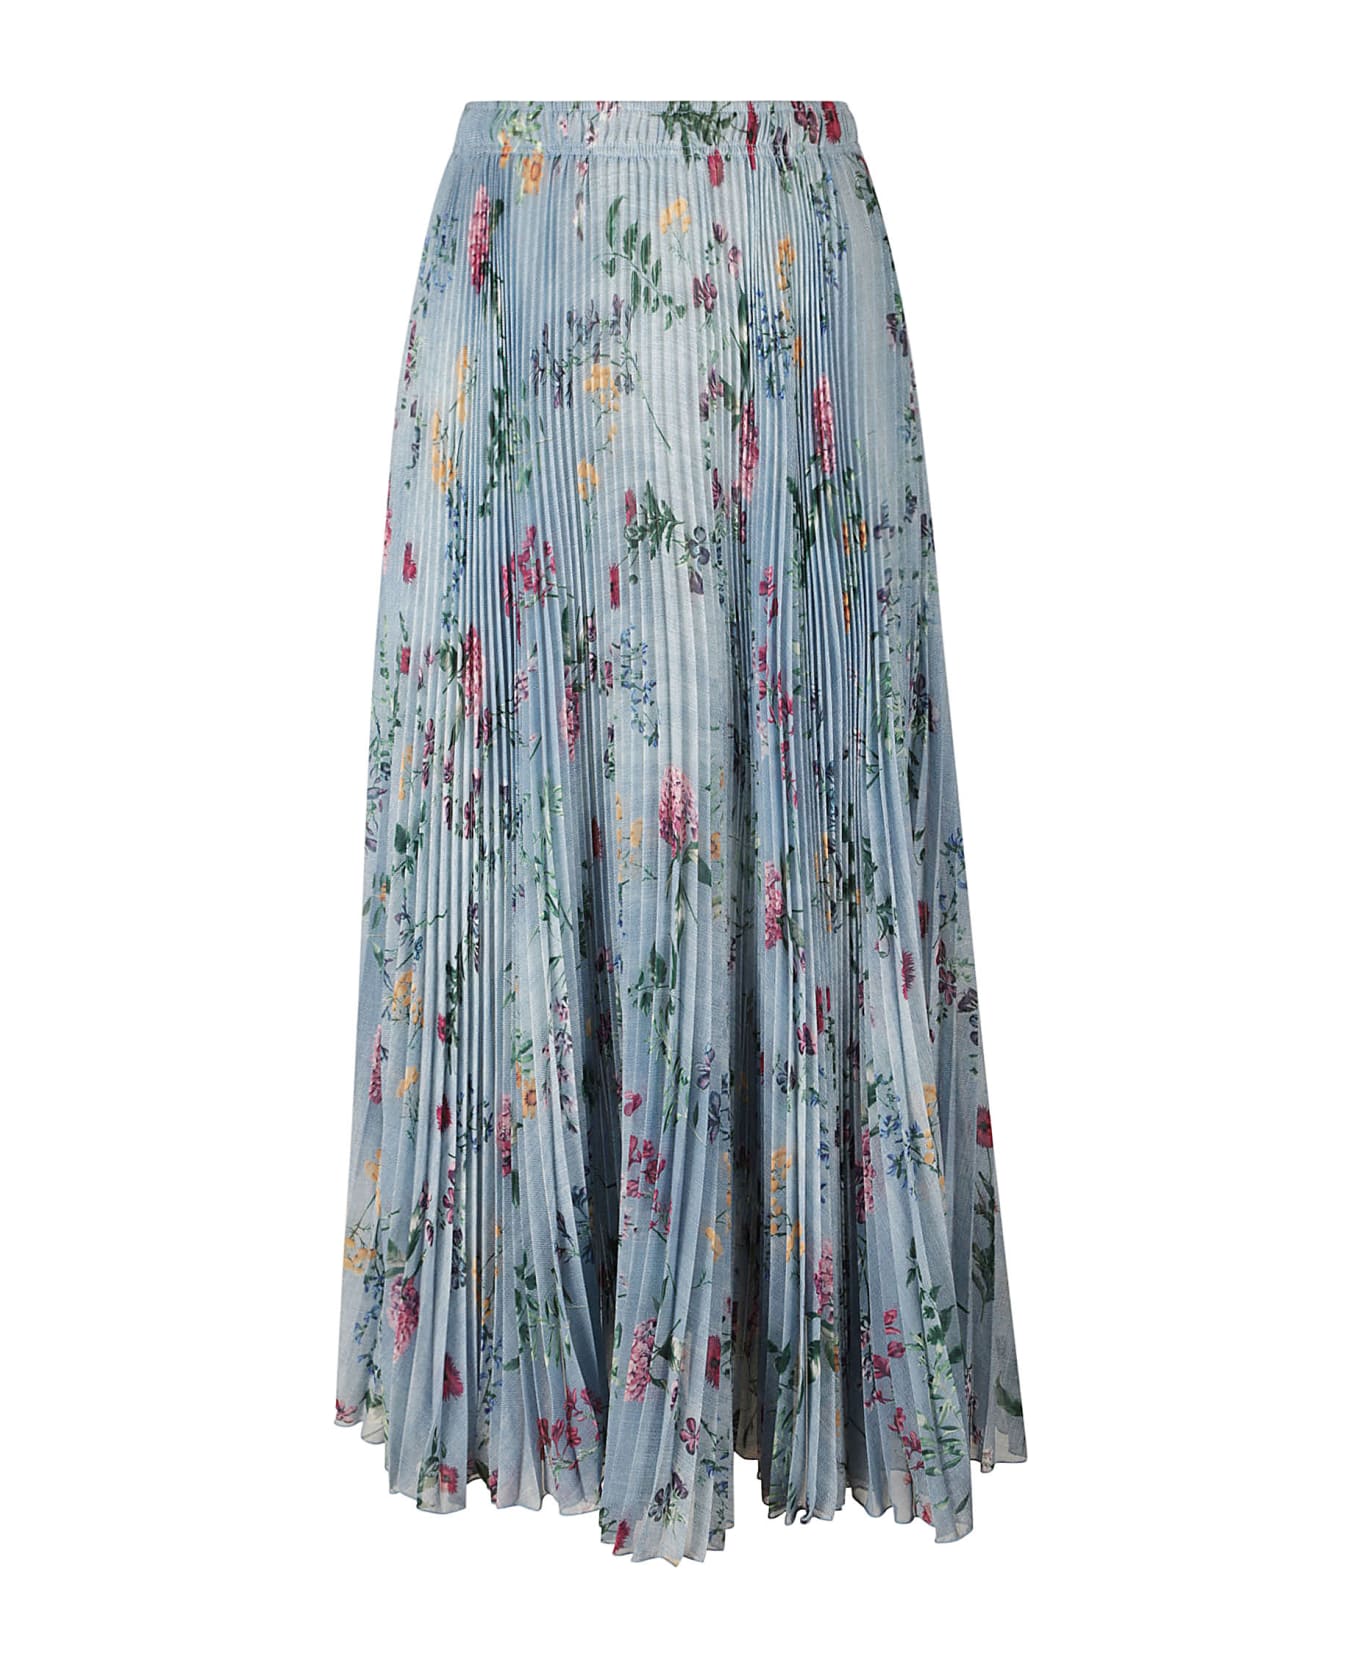 Ermanno Scervino Floral Print Pleated Skirt - Floreale スカート